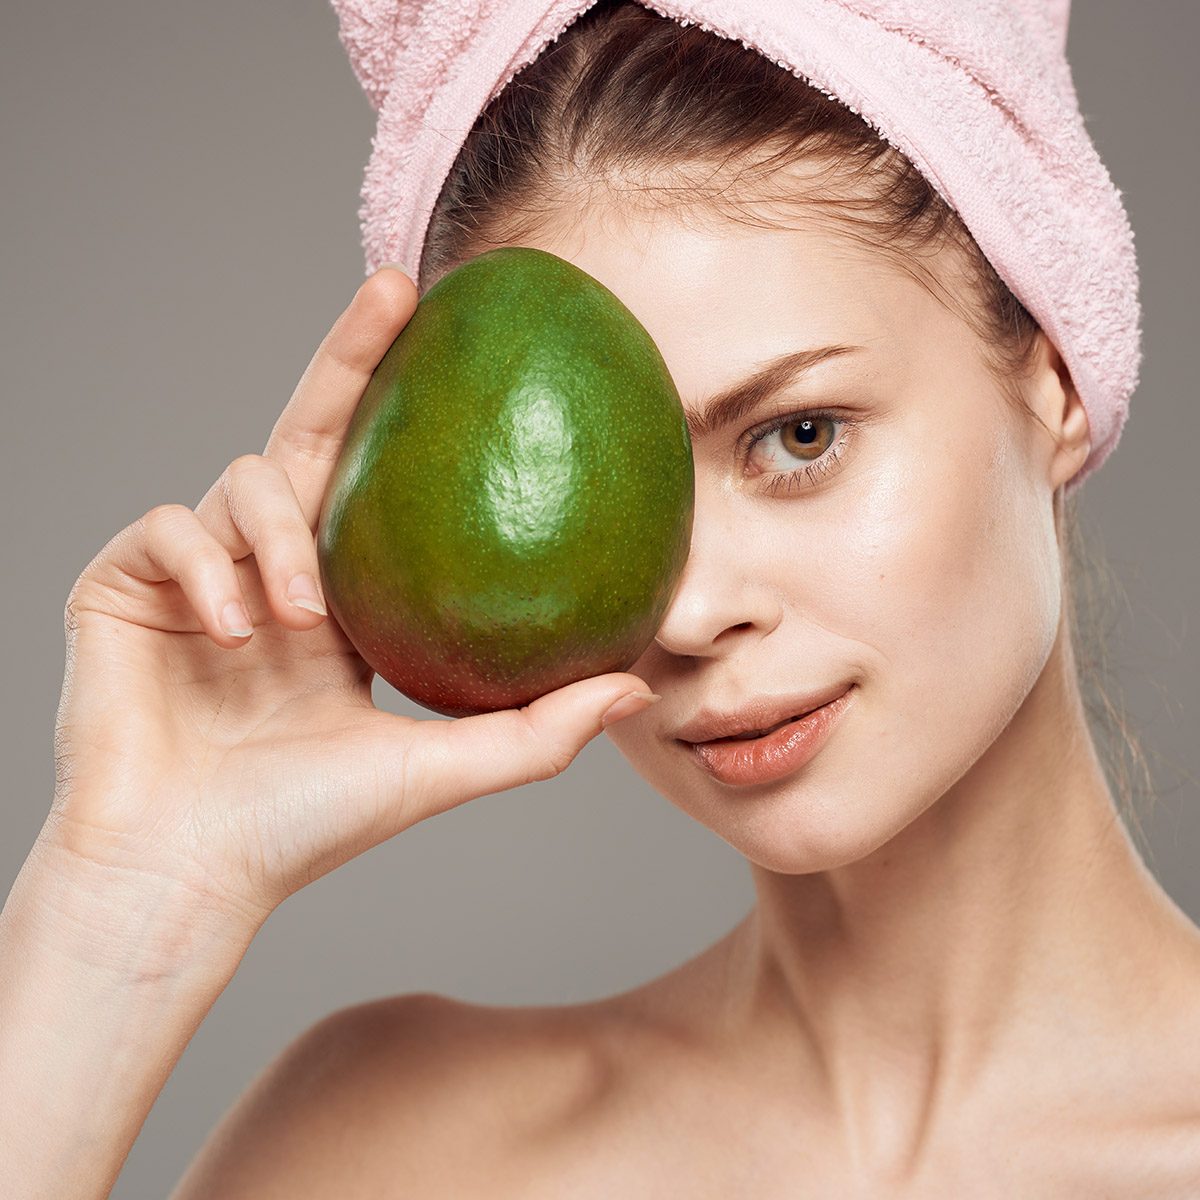 Mango-licious: The Top 6 Health Benefits of Mango